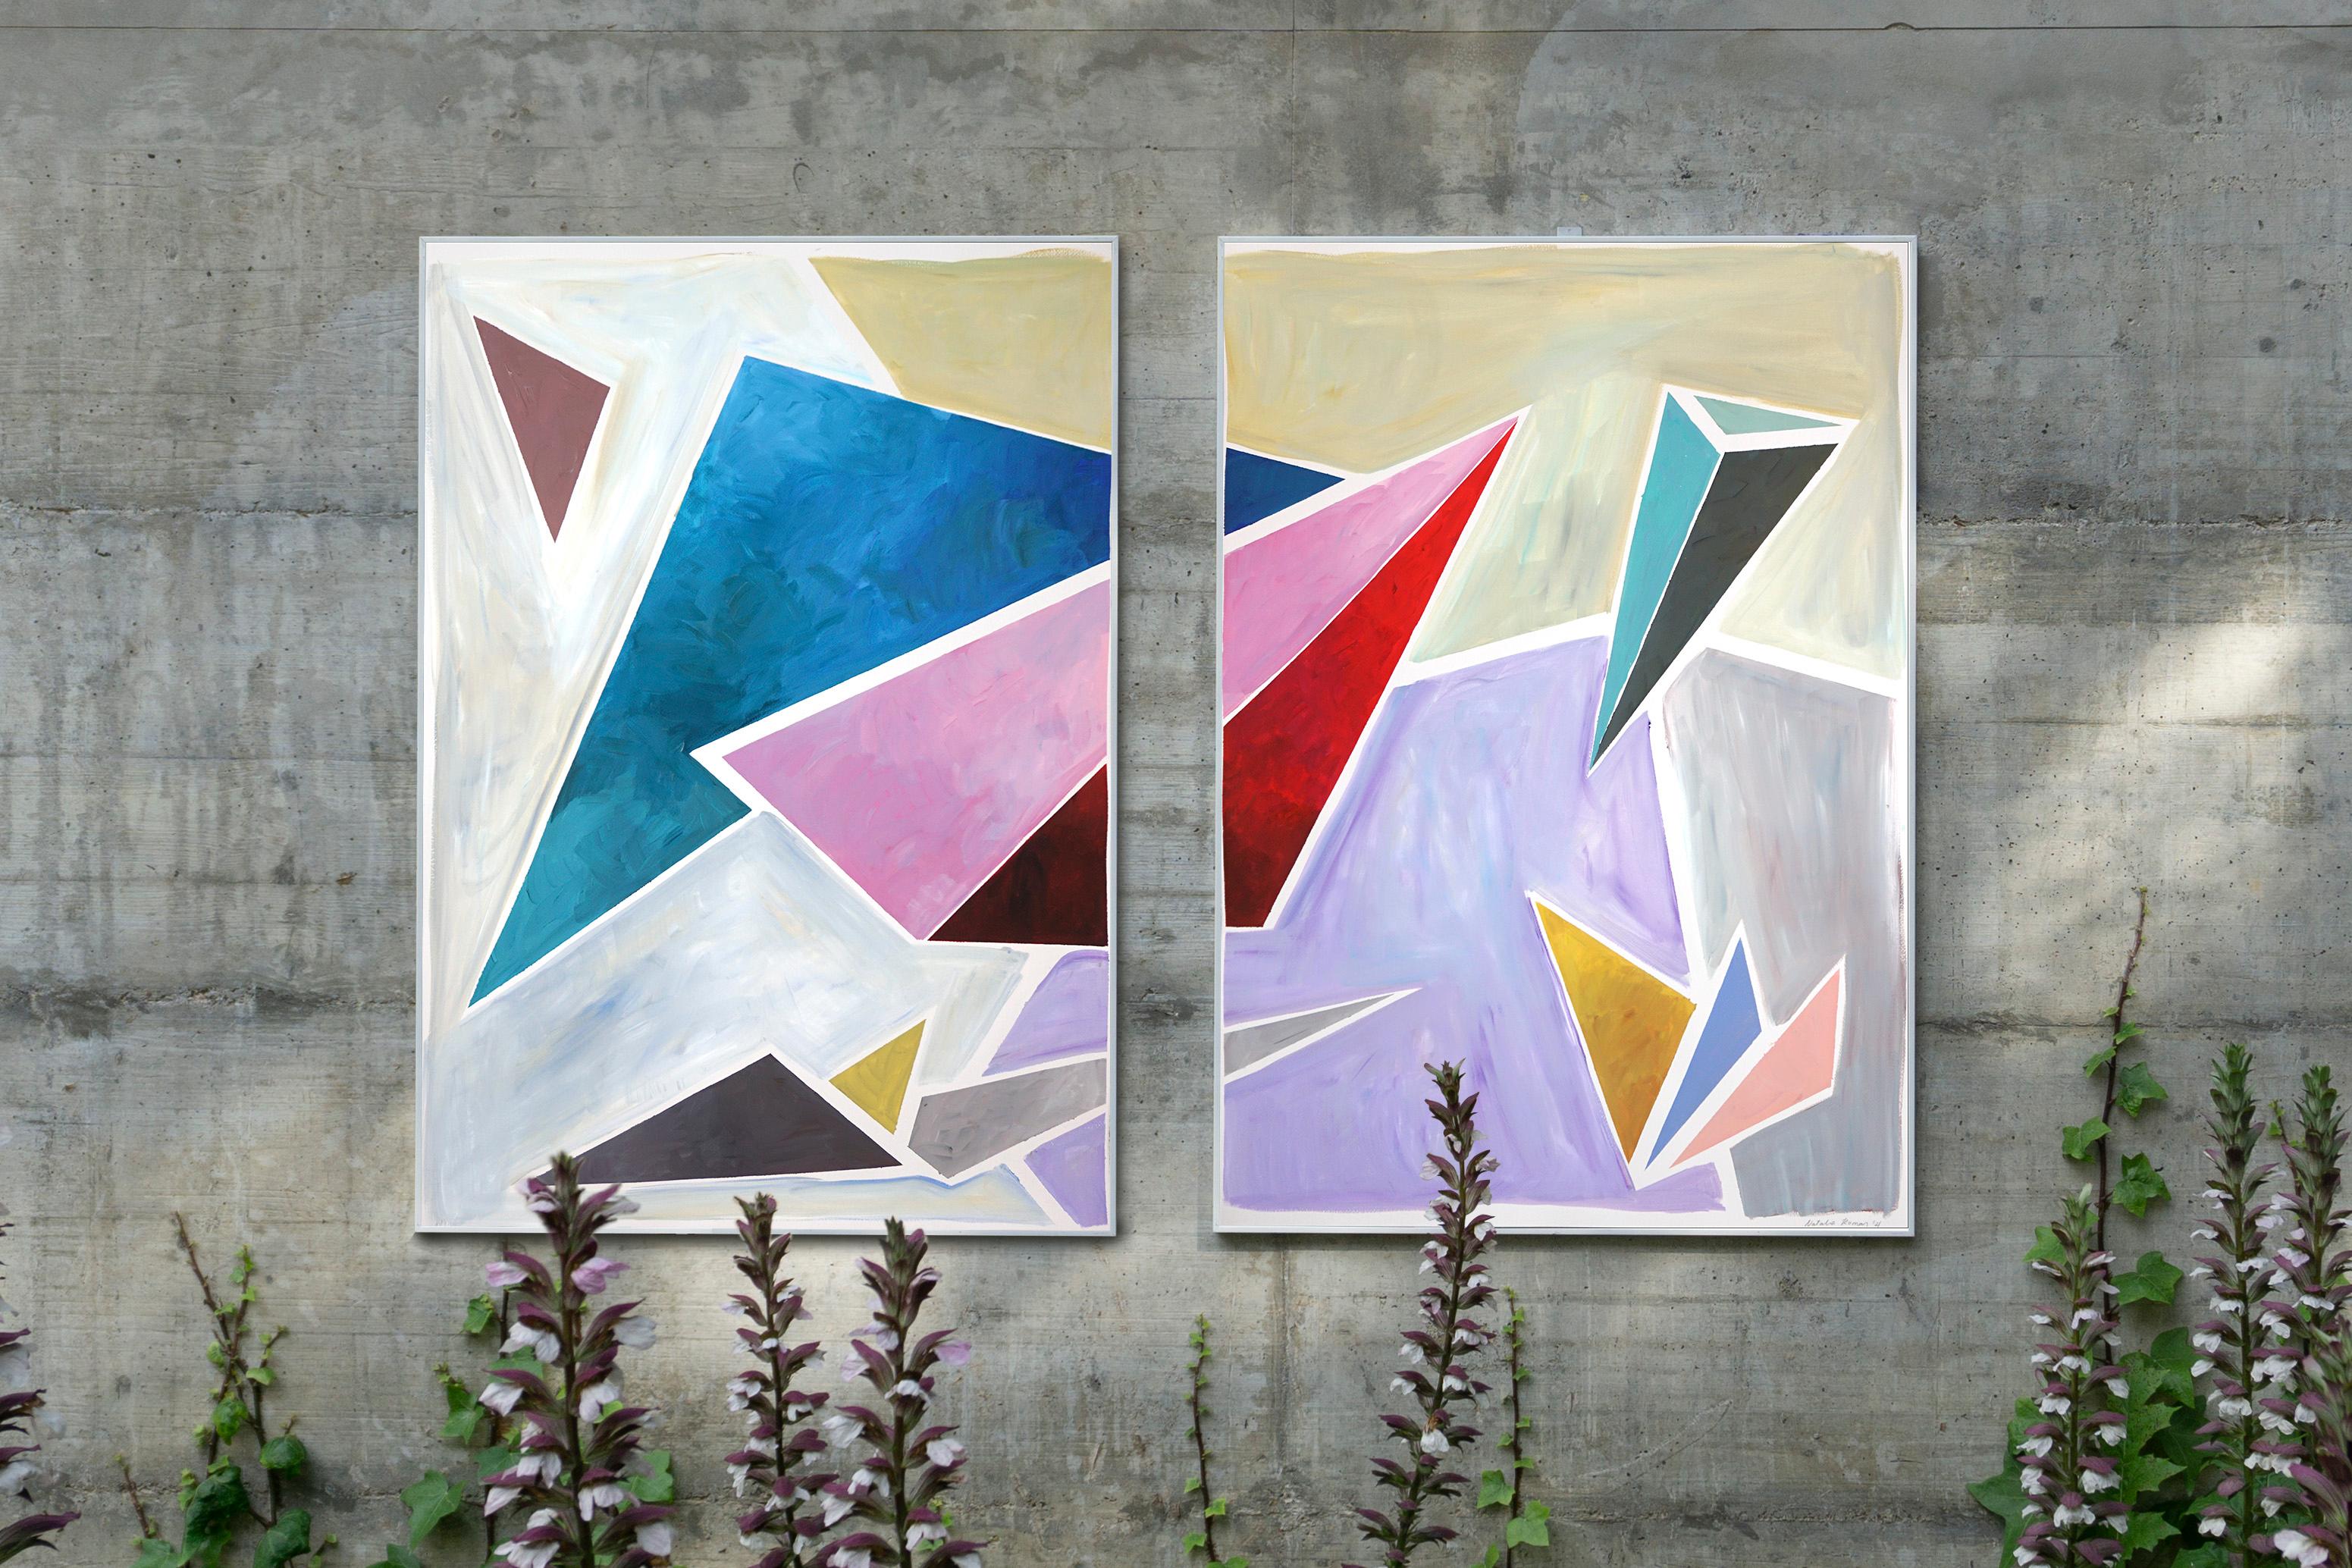 Retro Futuristic Angle Ensemble, Constructivist Painting Diptych in Pastel Tones 1